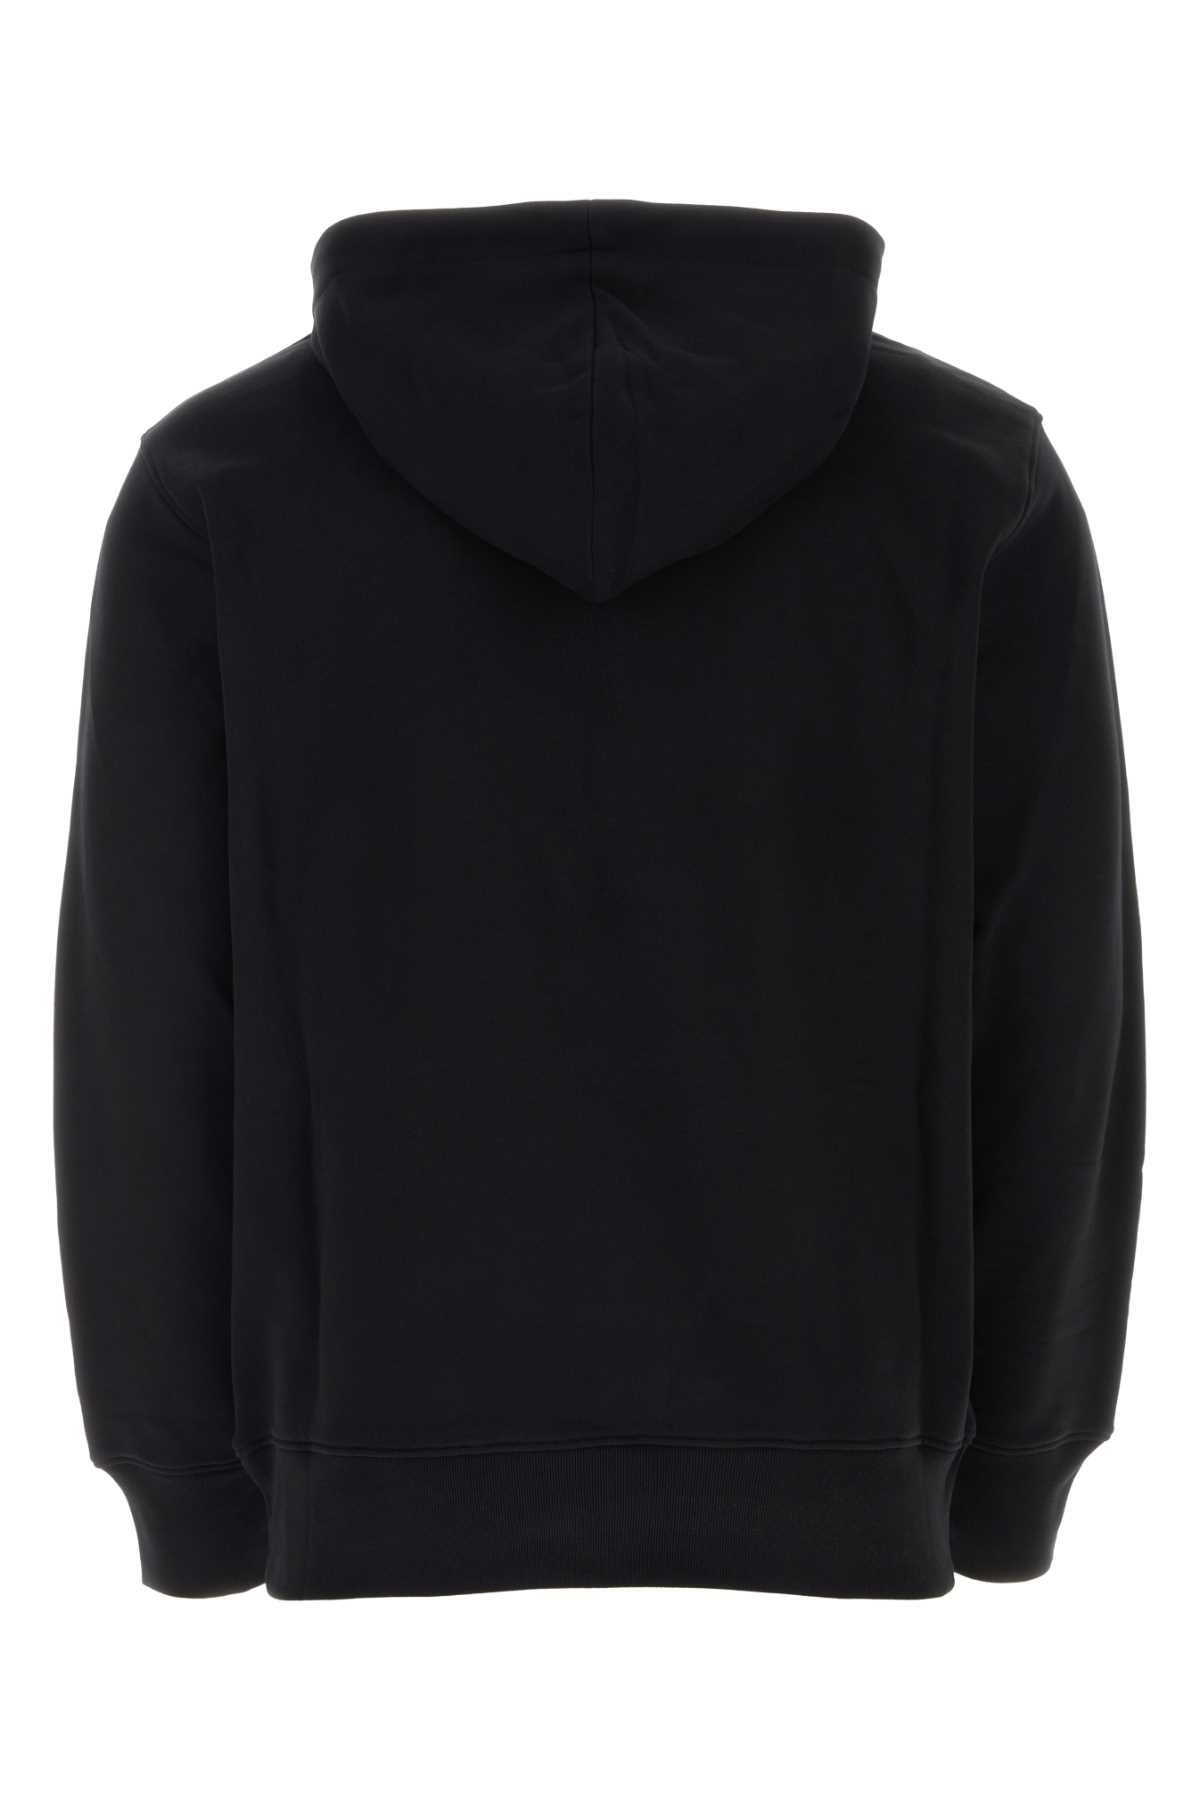 Moschino Black Cotton Sweatshirt In 1555